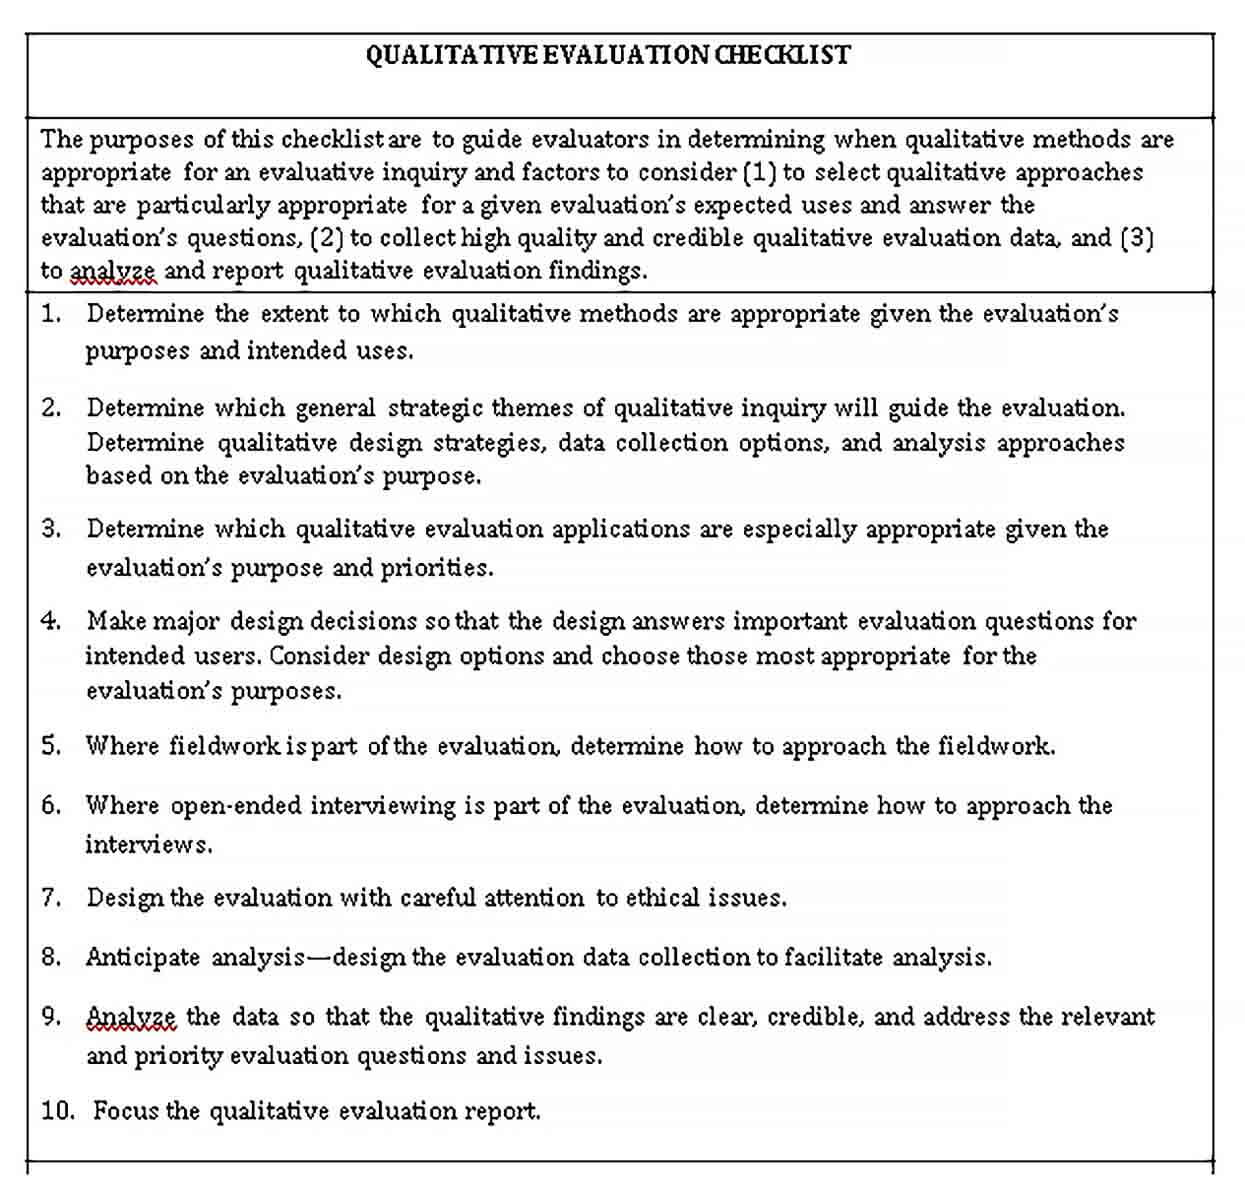 Sample Qualitative Project Evaluation Checklist